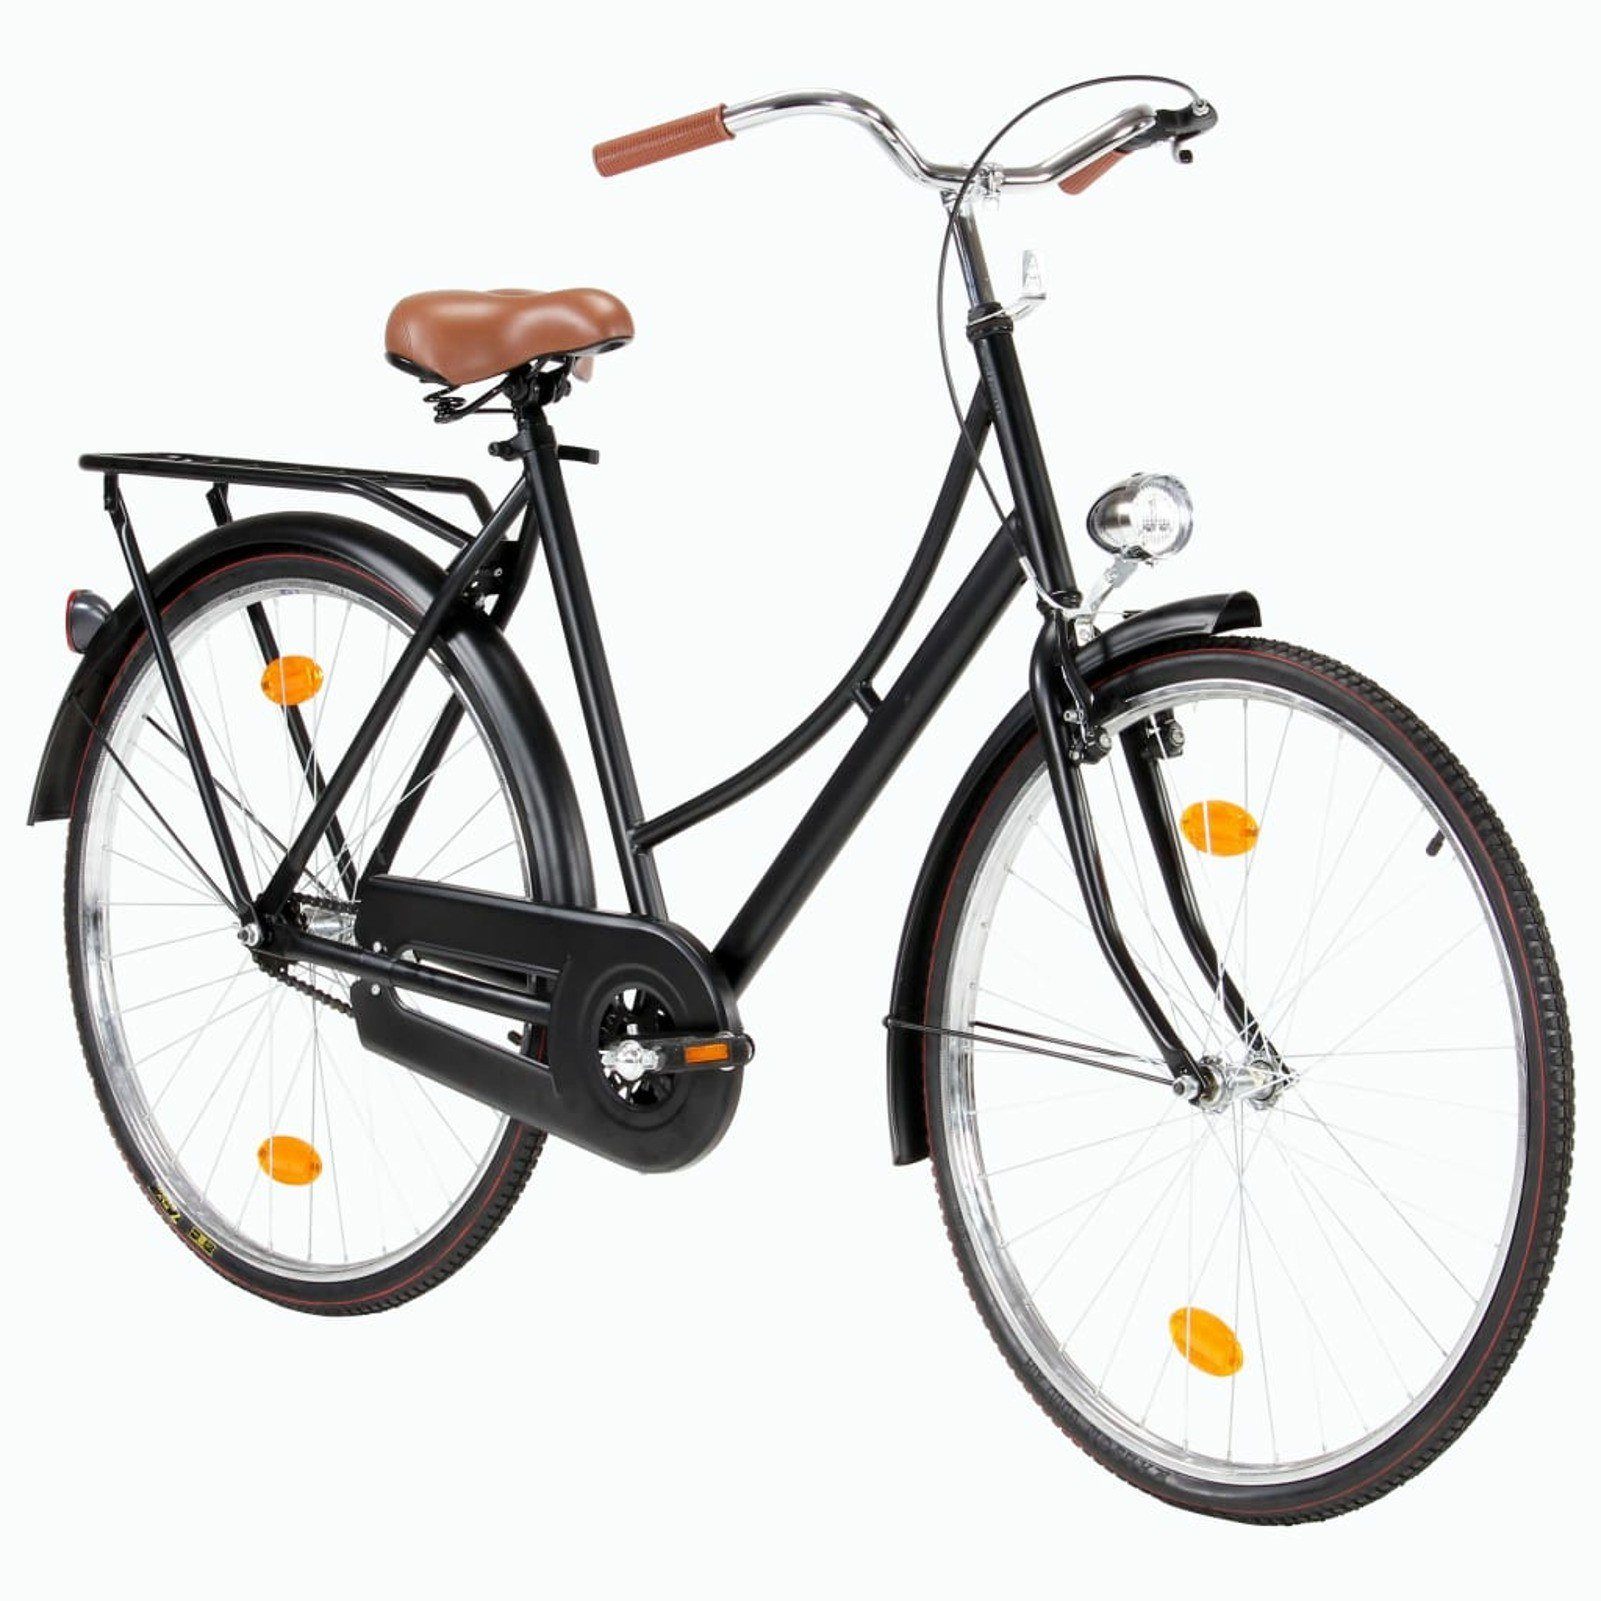 Hollandrad online kaufen » Nostalgie-Fahrrad | OTTO